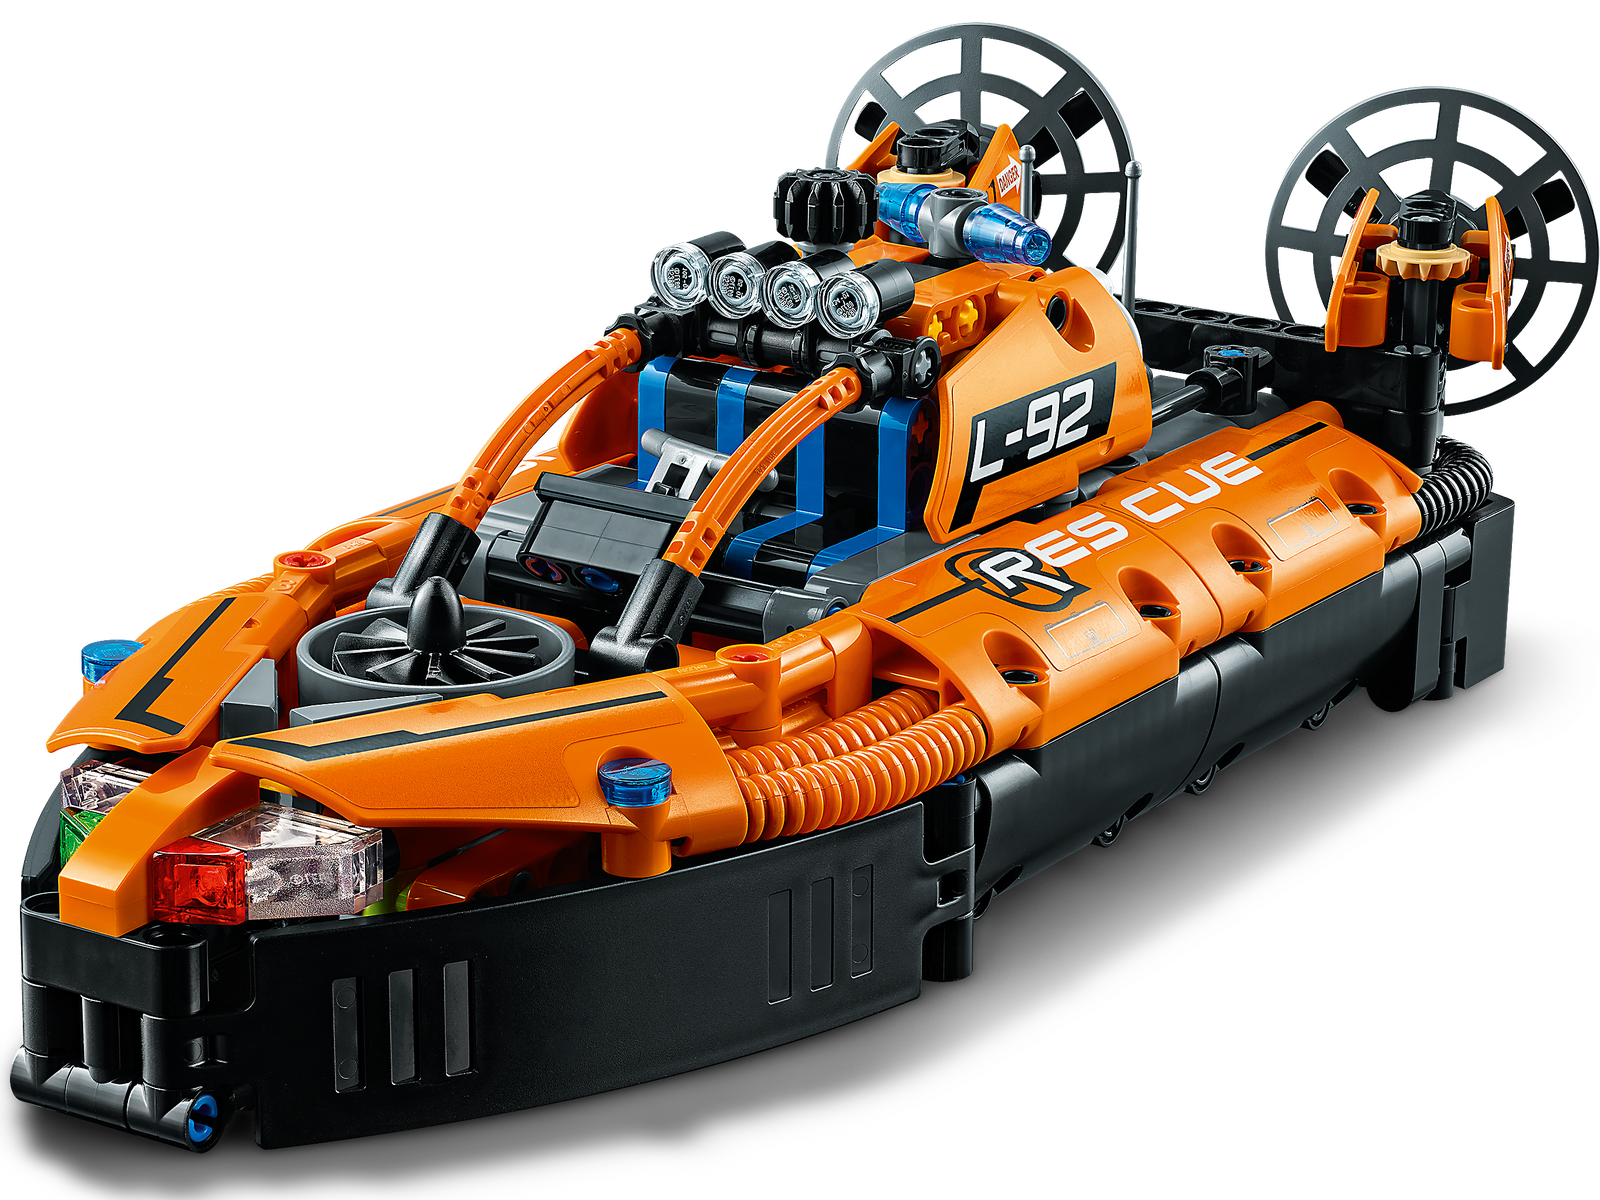 Lego Technic Rescue Hovercraft 42120